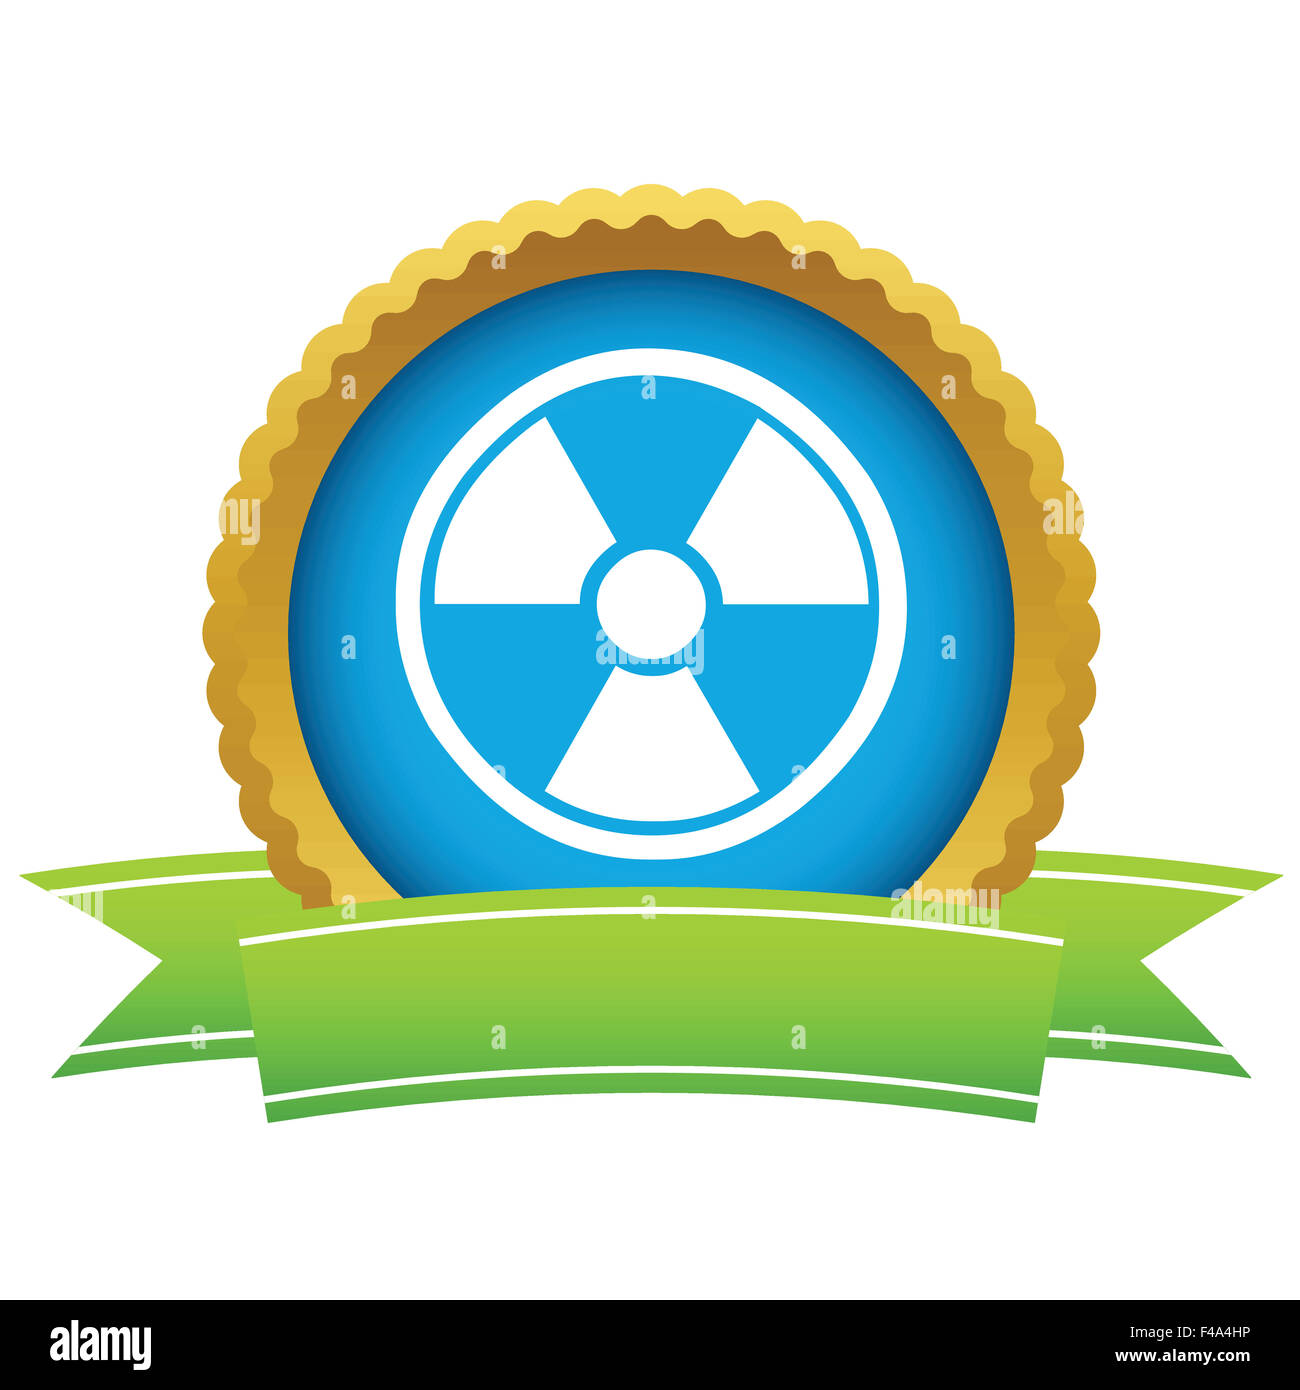 Gold nuclear logo Stock Photo